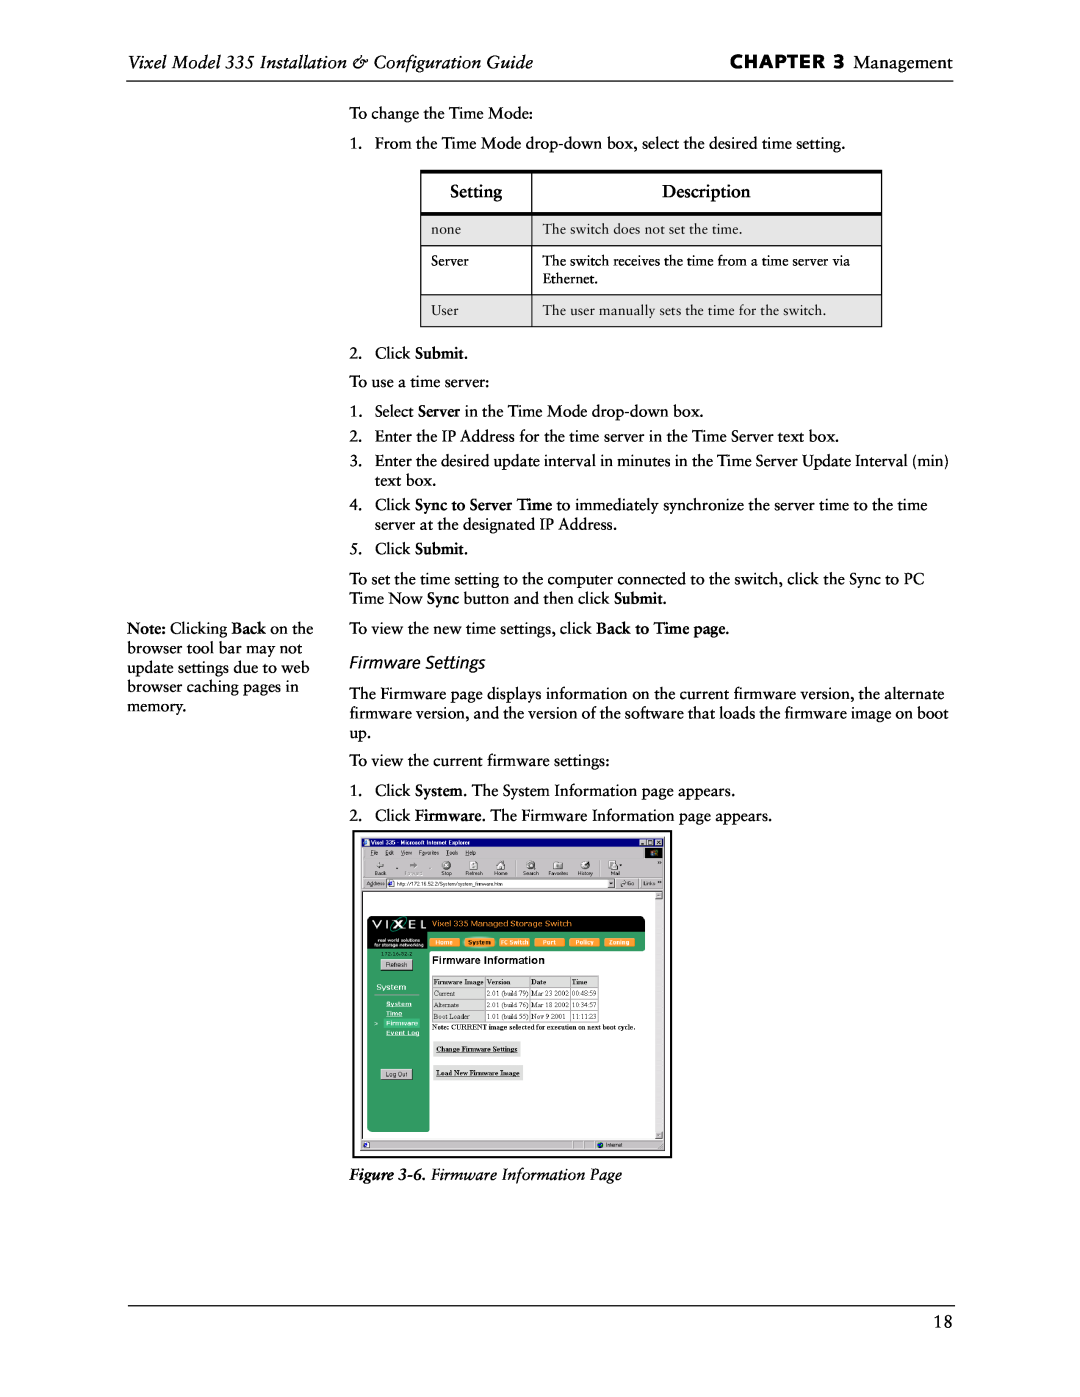 Vixel manual Management, Vixel Model 335 Installation & Configuration Guide, Description, Firmware Settings 